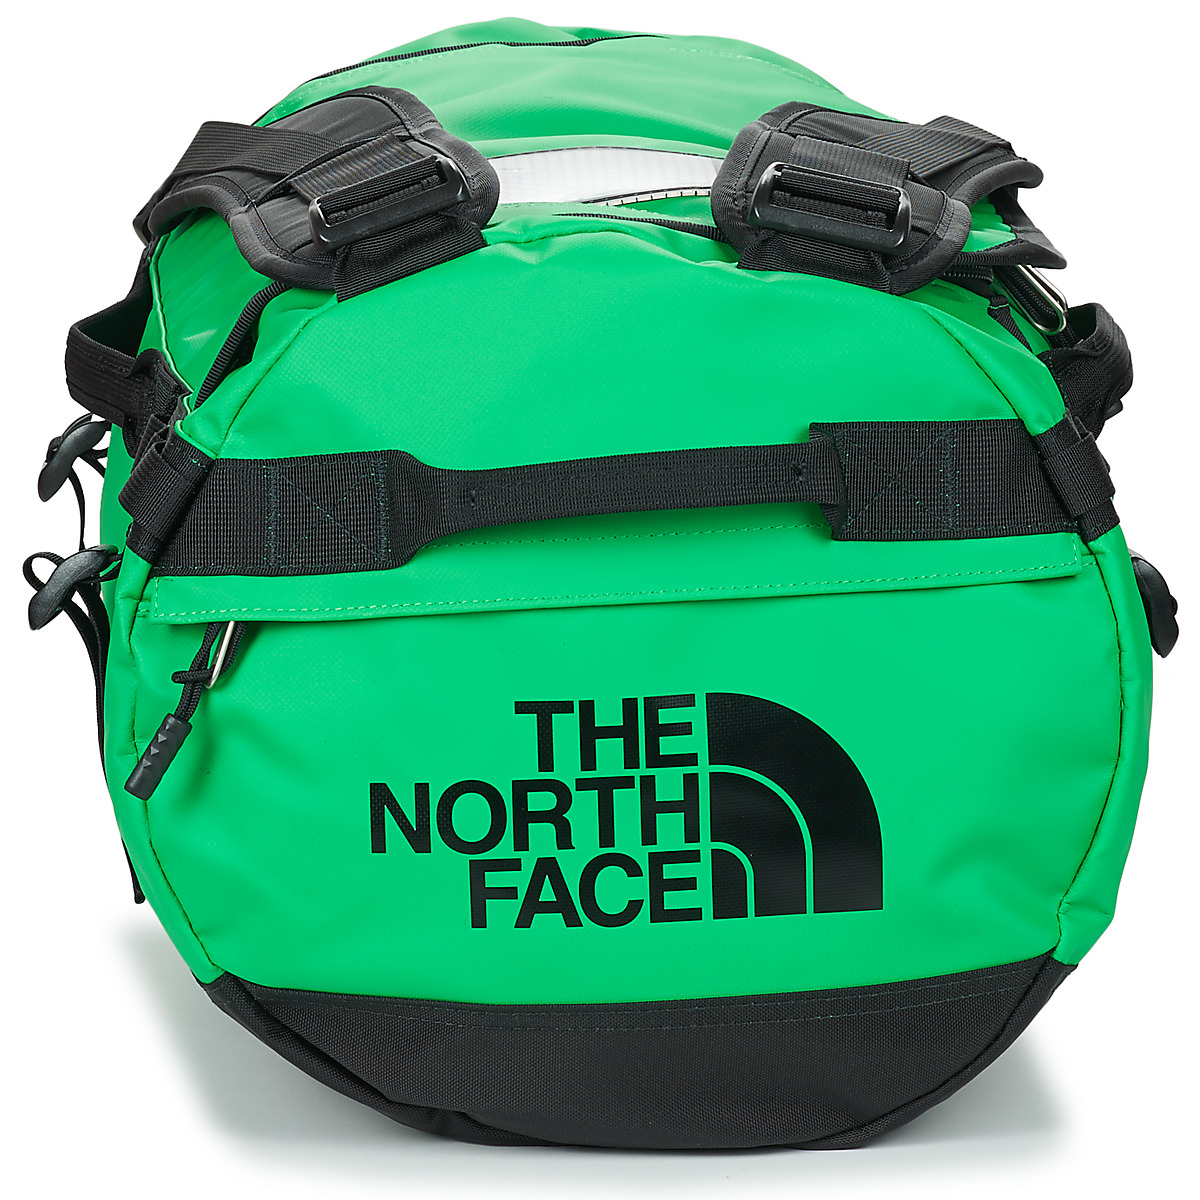 The North Face Vert / noir BASE CAMP DUFFEL - S ro5Ay6jx